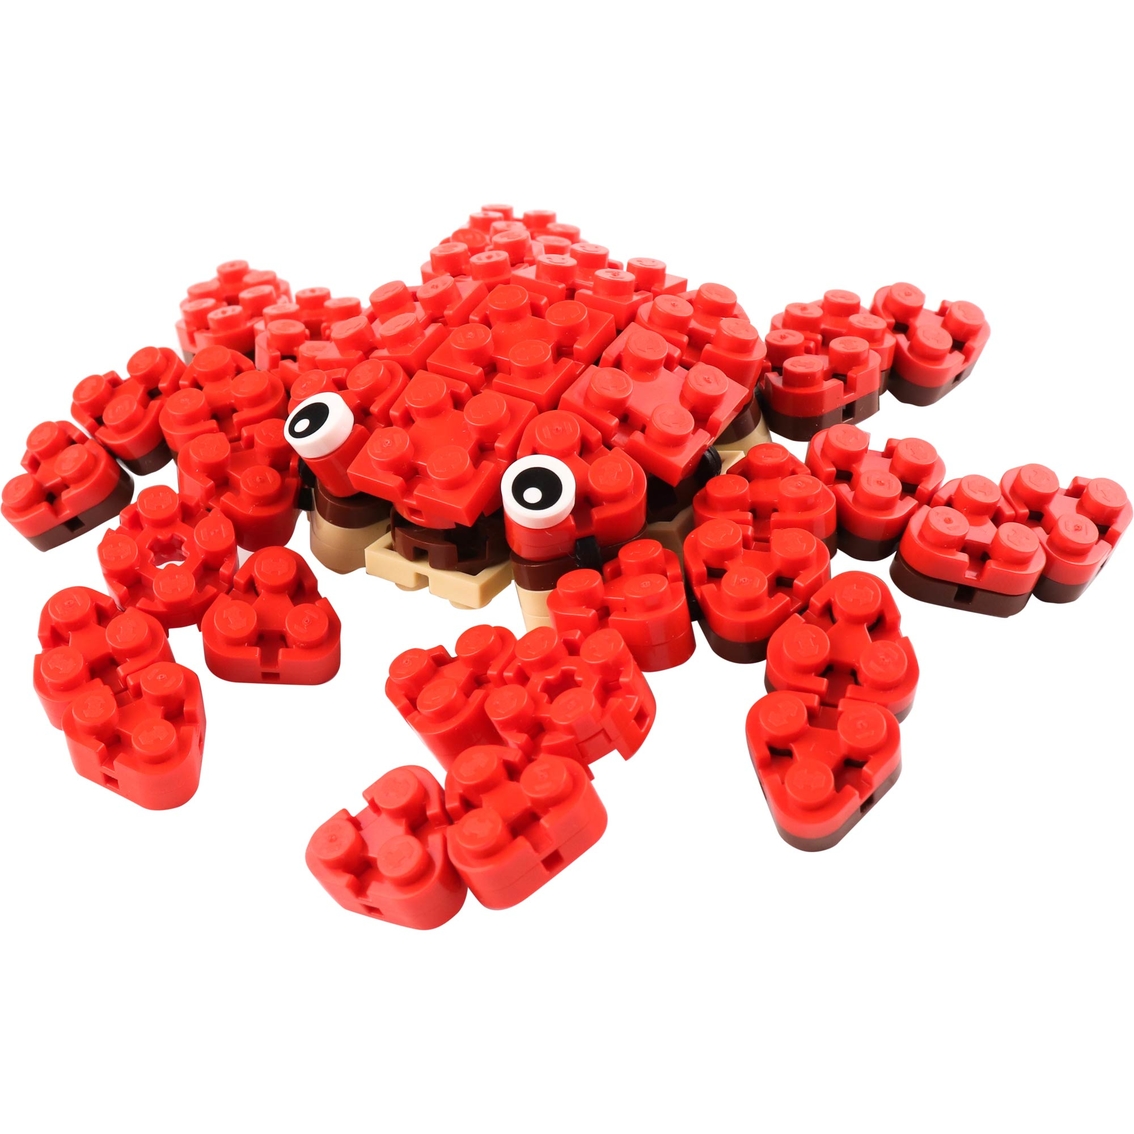 Flexo Building Bricks Ocean Life Range Crab - Image 3 of 3